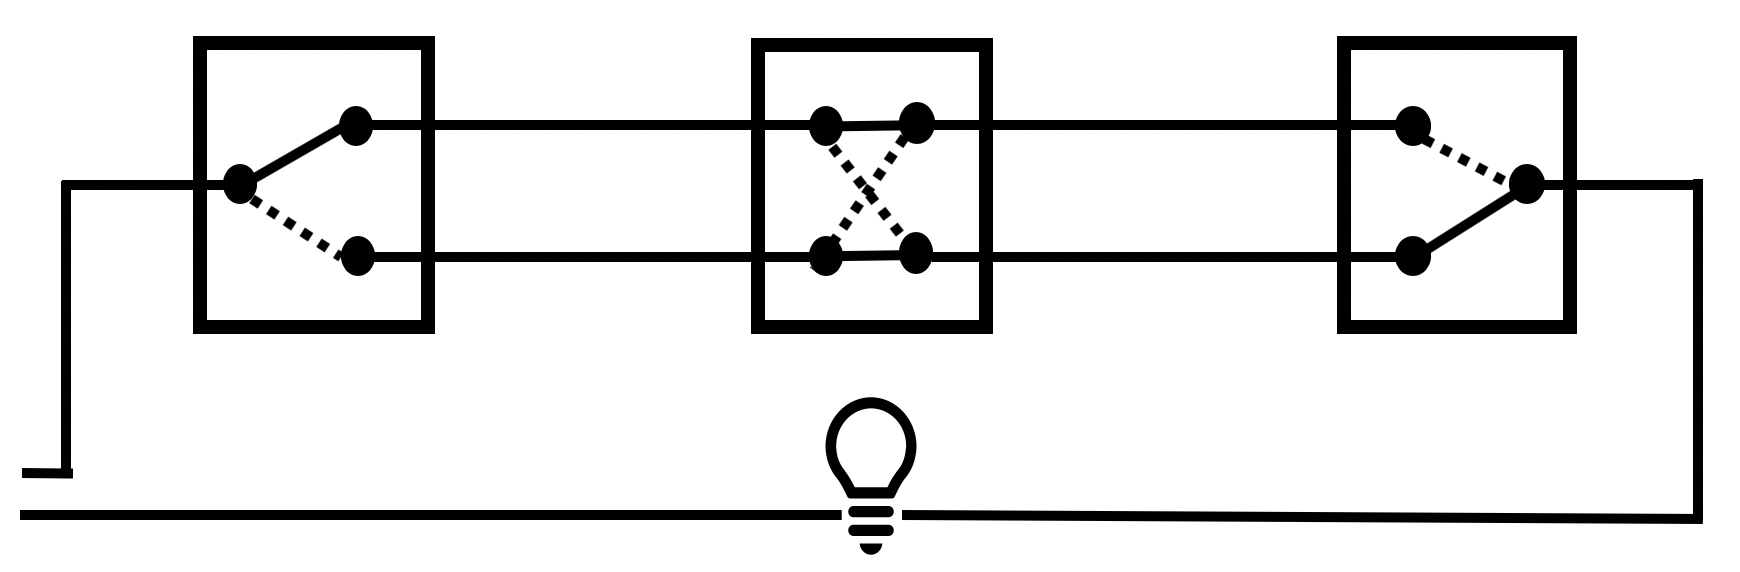 Four way switch Circuit diagram